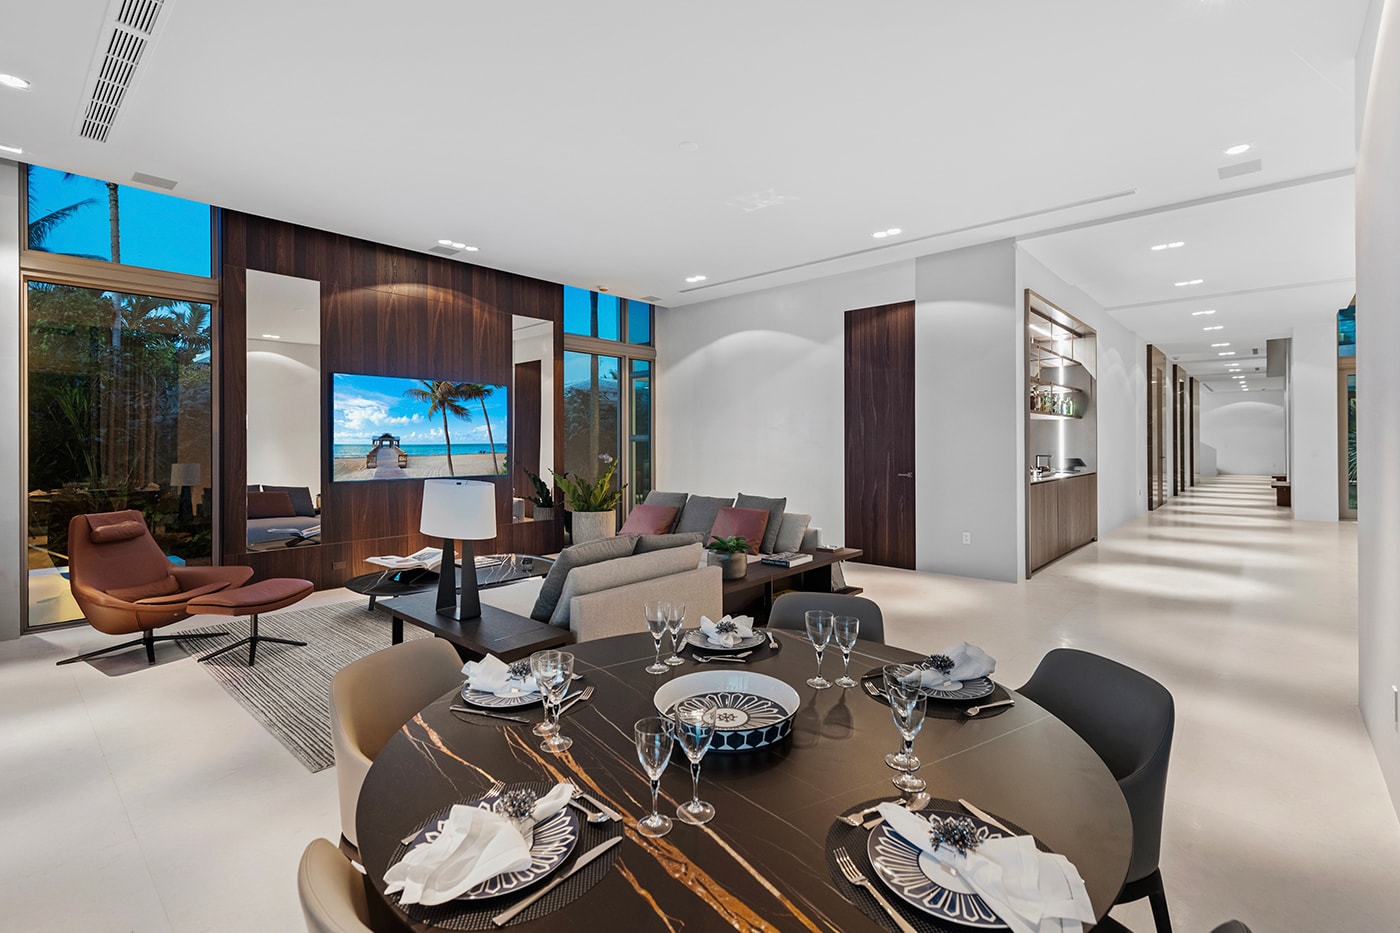 Sotheby’s International Realty Miami Heat Chris Bosh North Bay 42 million usd florida home mansions homes design Touzet Studio AquaBlue Group